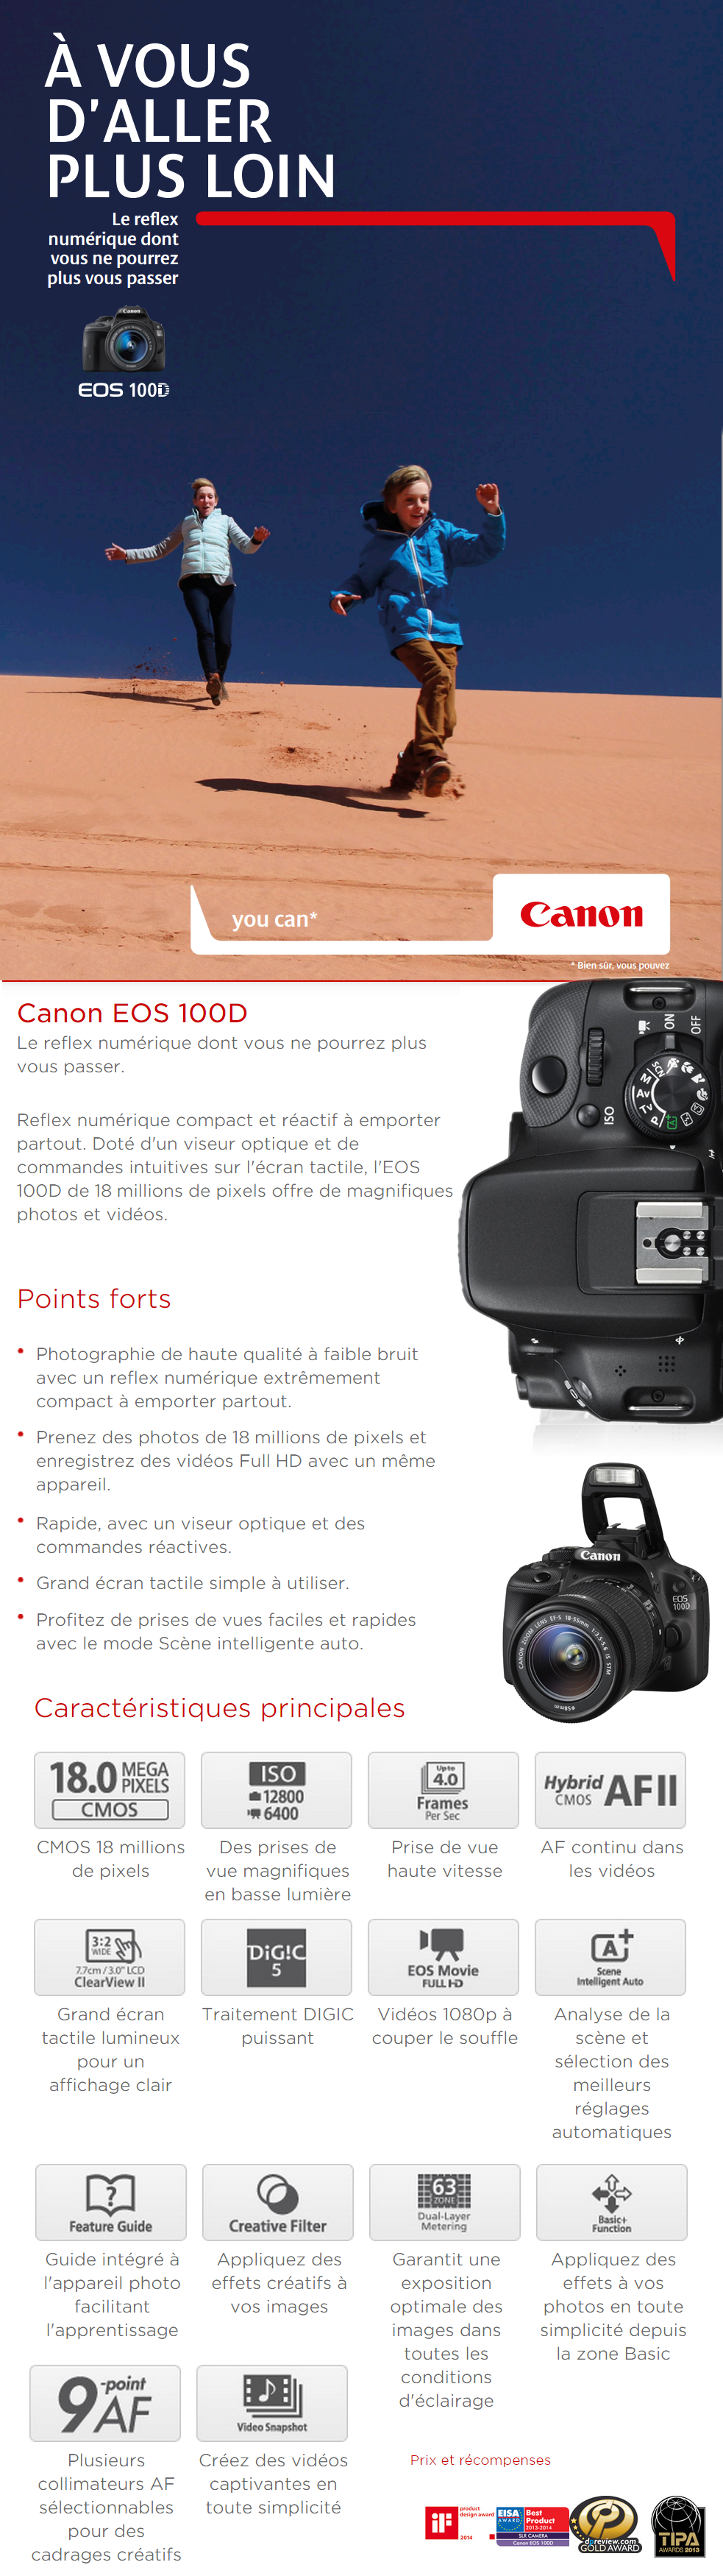 Acheter Reflex Canon EOS 100D + Objectif Canon EF-S 18-55mm f/3.5-5.6 IS STM Maroc